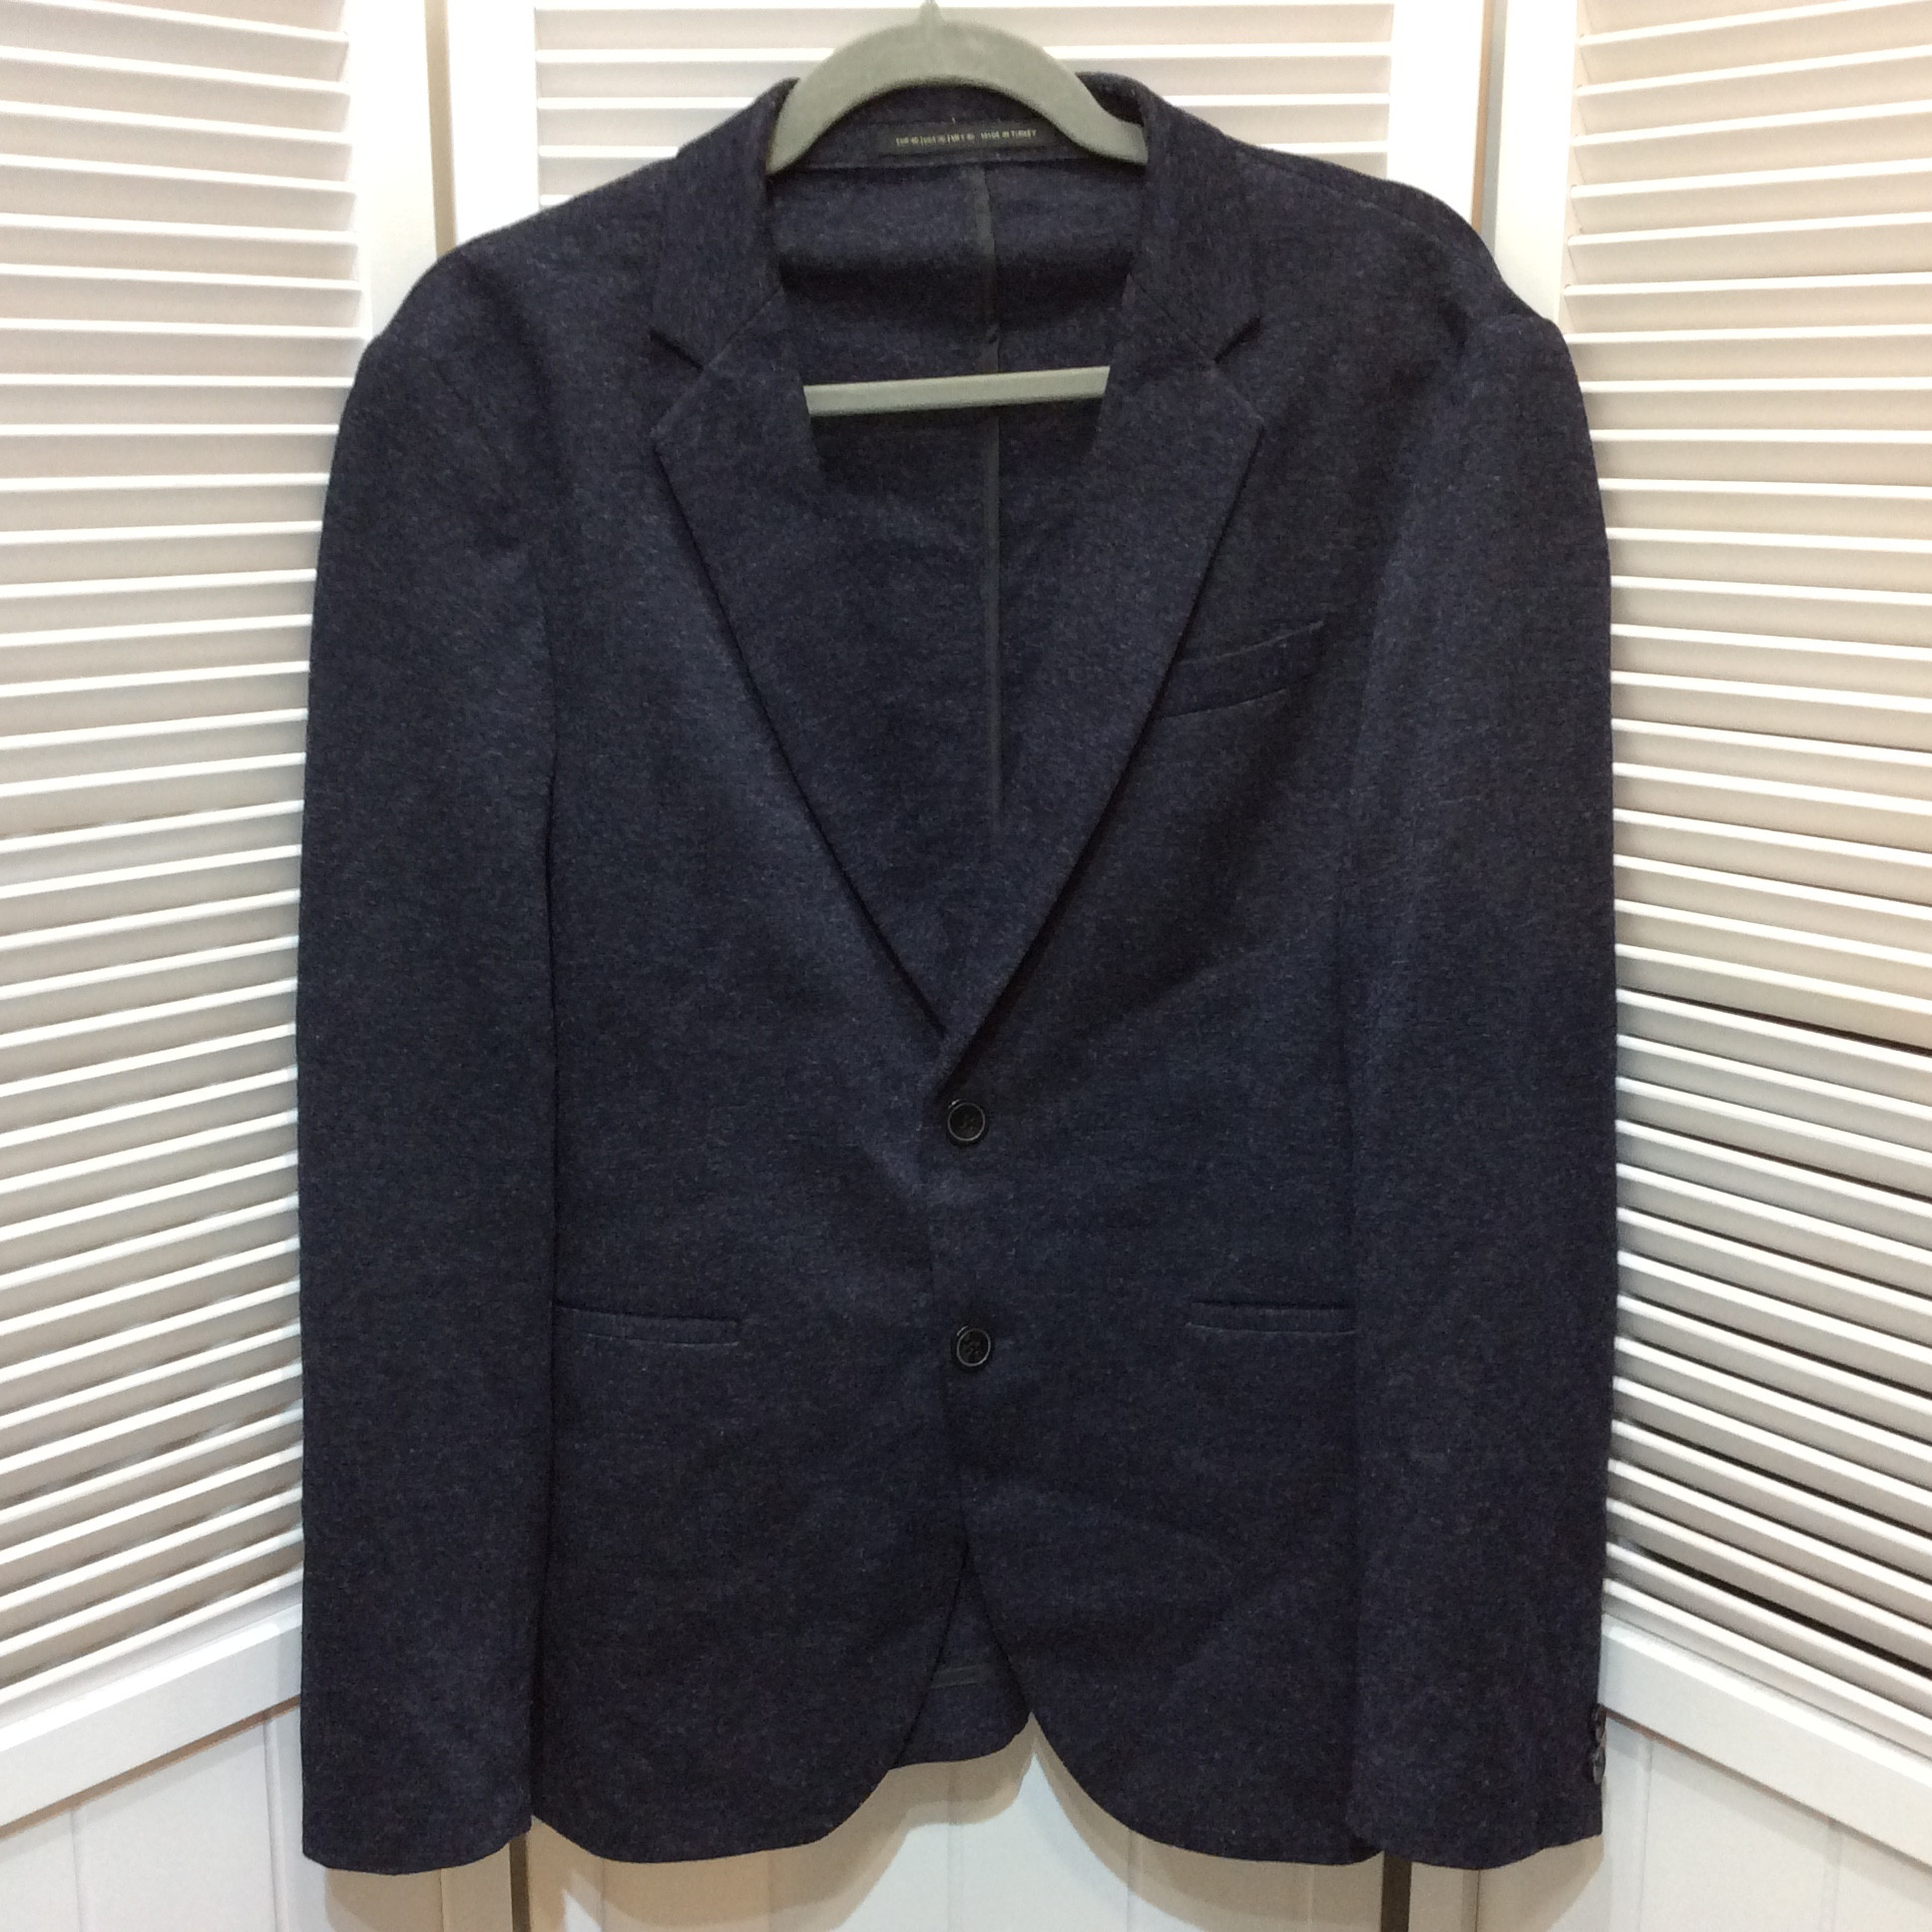 ZARA ザラ メンズ ジャケット ネイビー EUR46 USA36 MEX46 Suits Collection AW'18